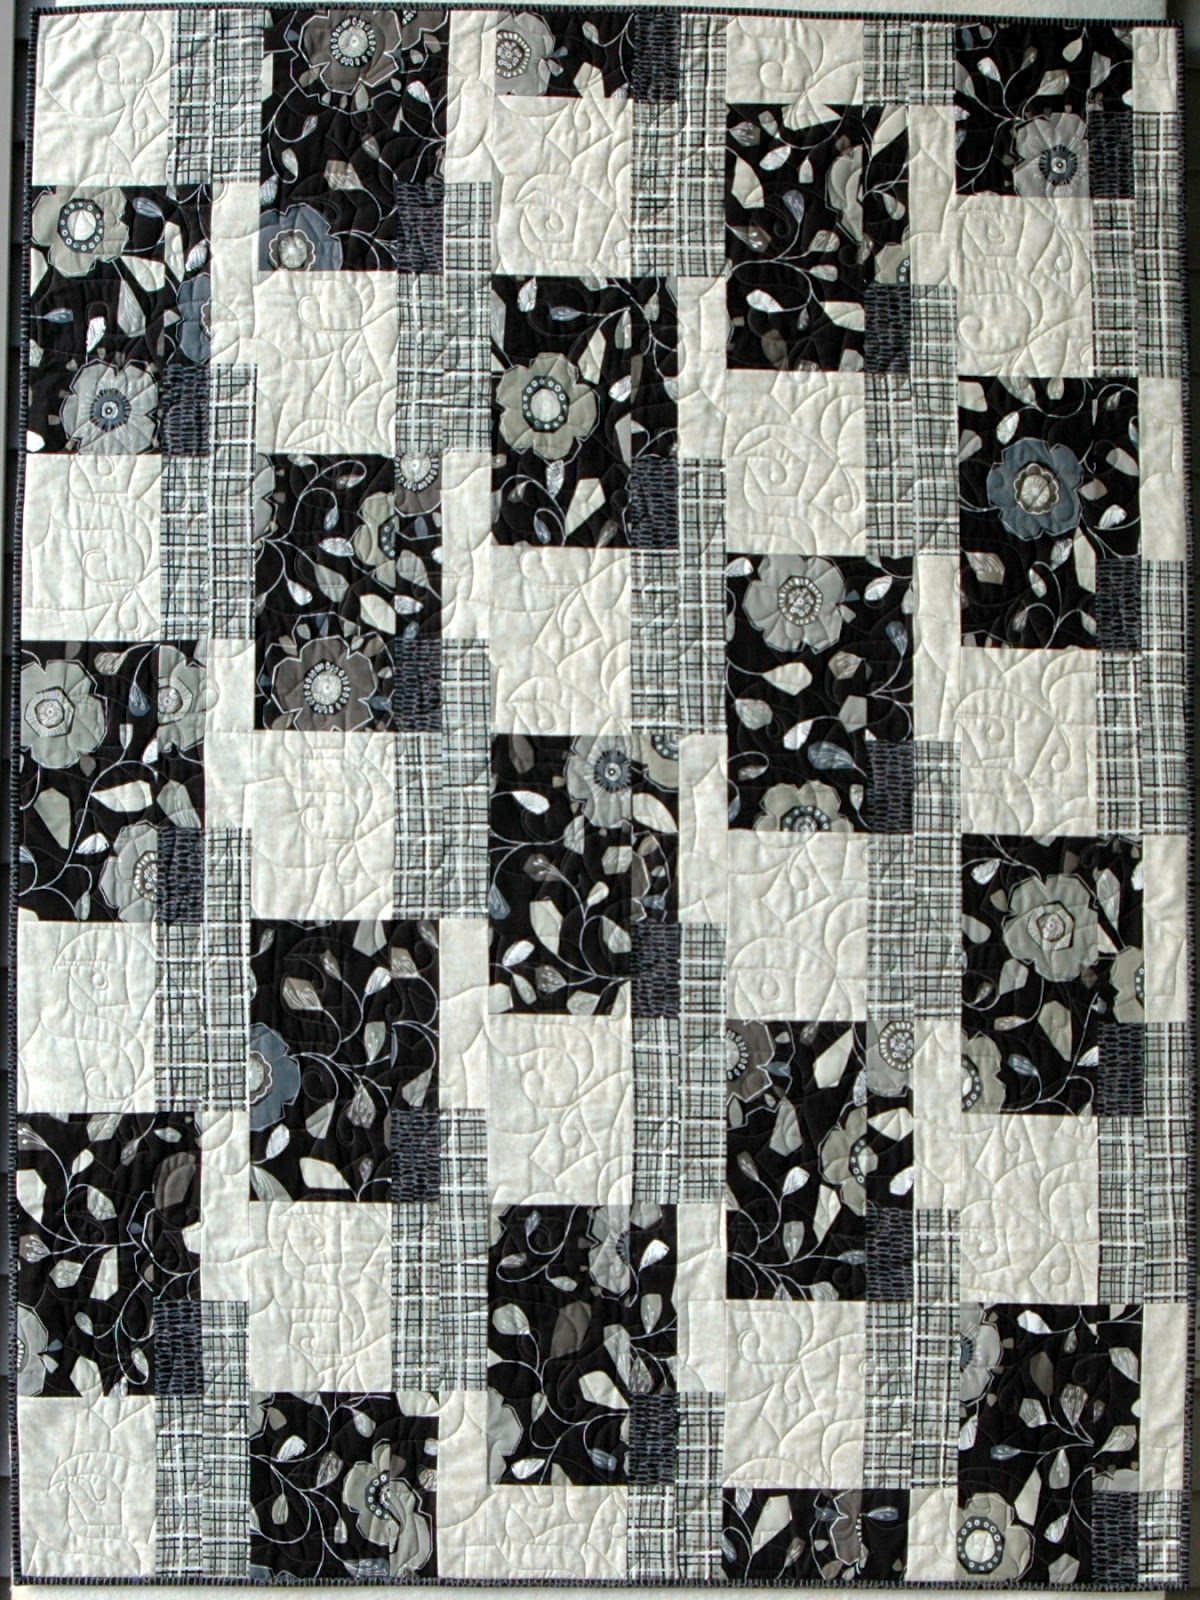 Modern Quilt Relish: Urbanicity Fabric + Flatbread Pattern = Recipe for